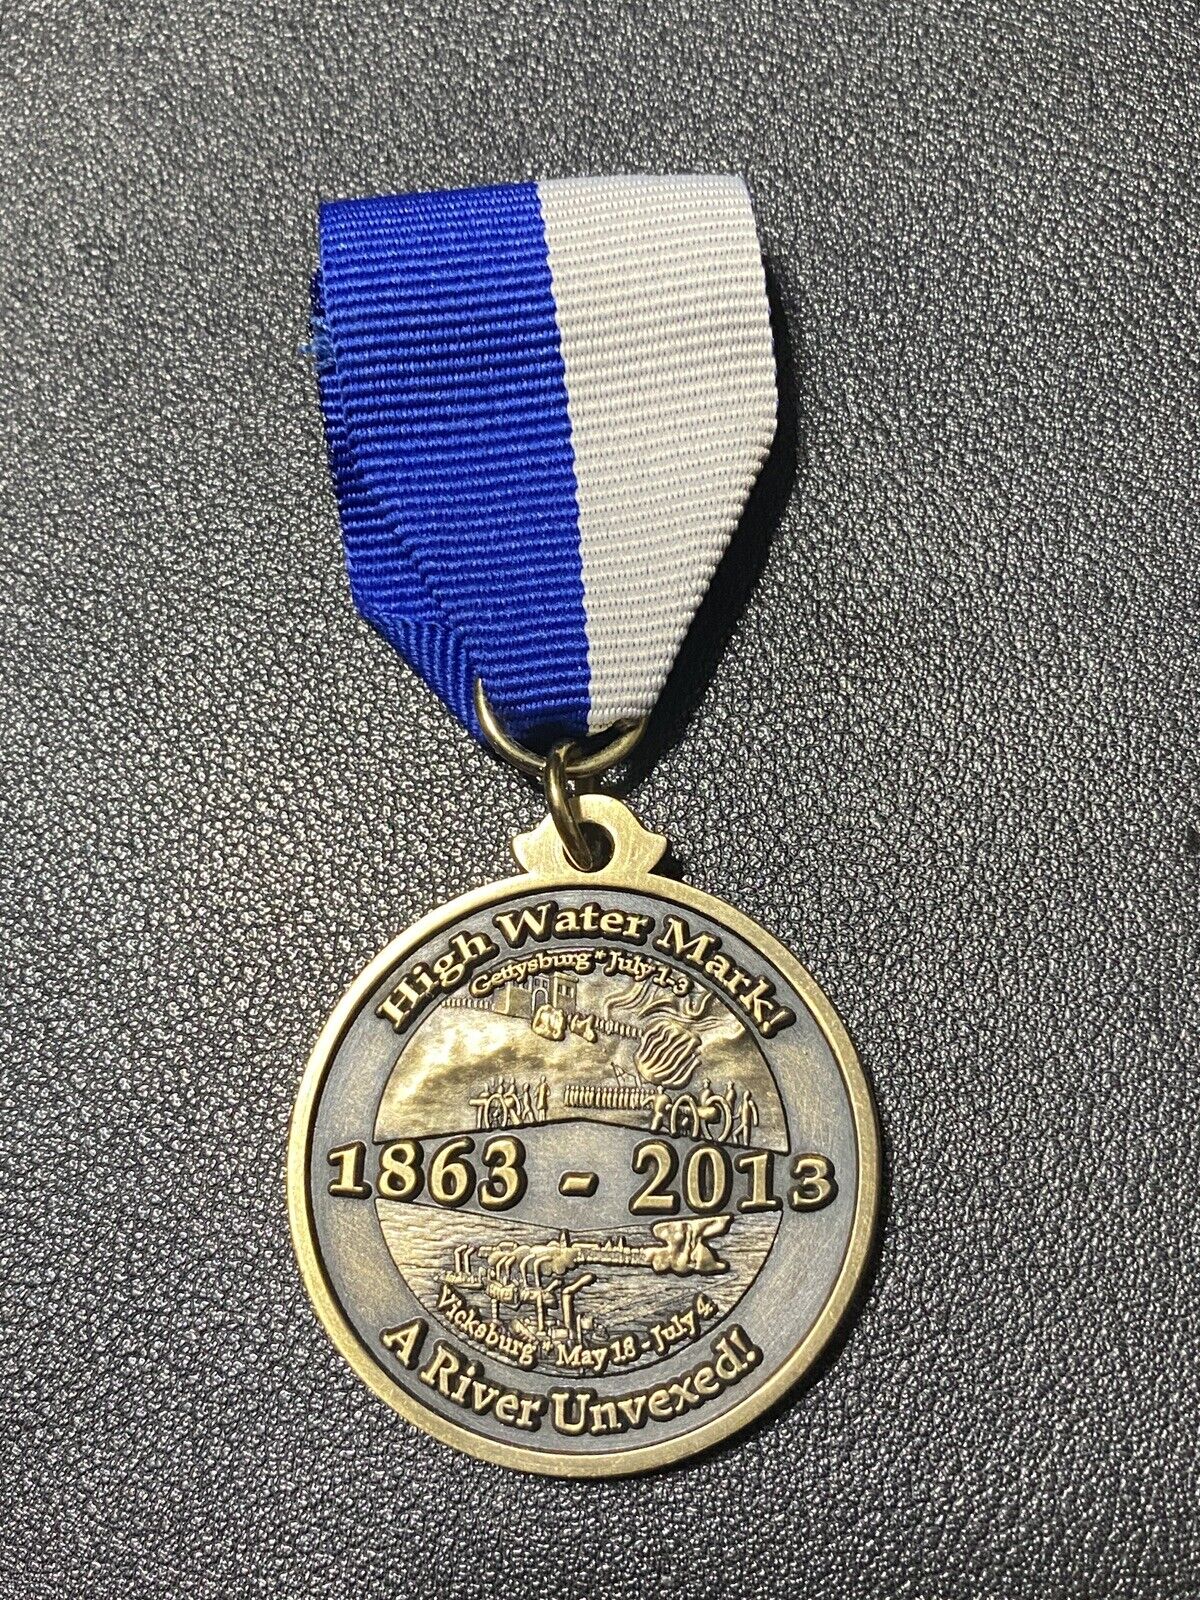 150th Anniversary Civil War Medal 2013 "high Water Marks"